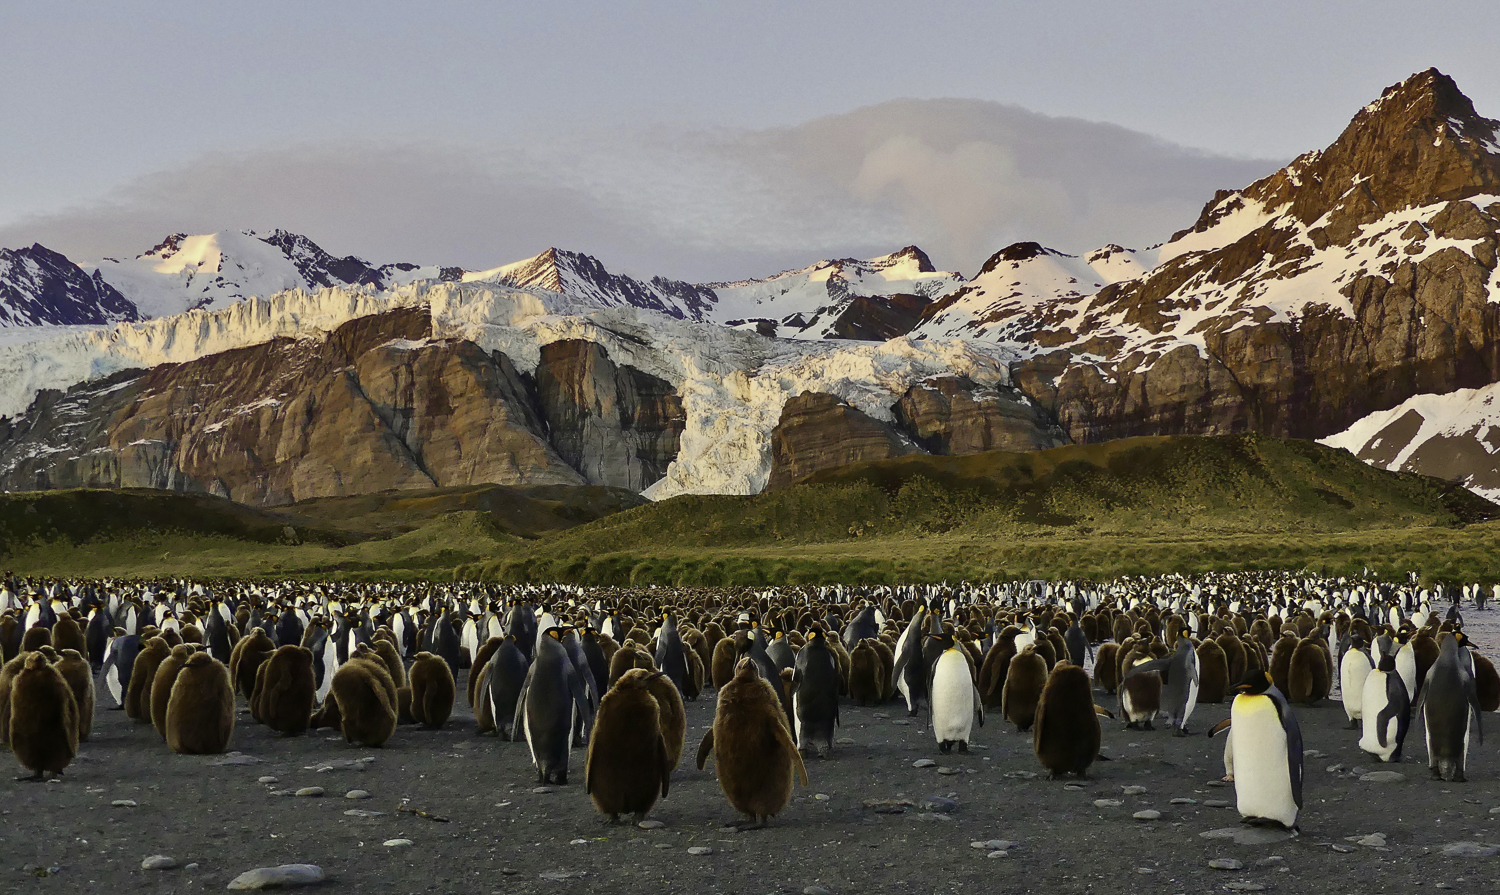 ePostcard #49: Penguins, Penguins Everywhere!